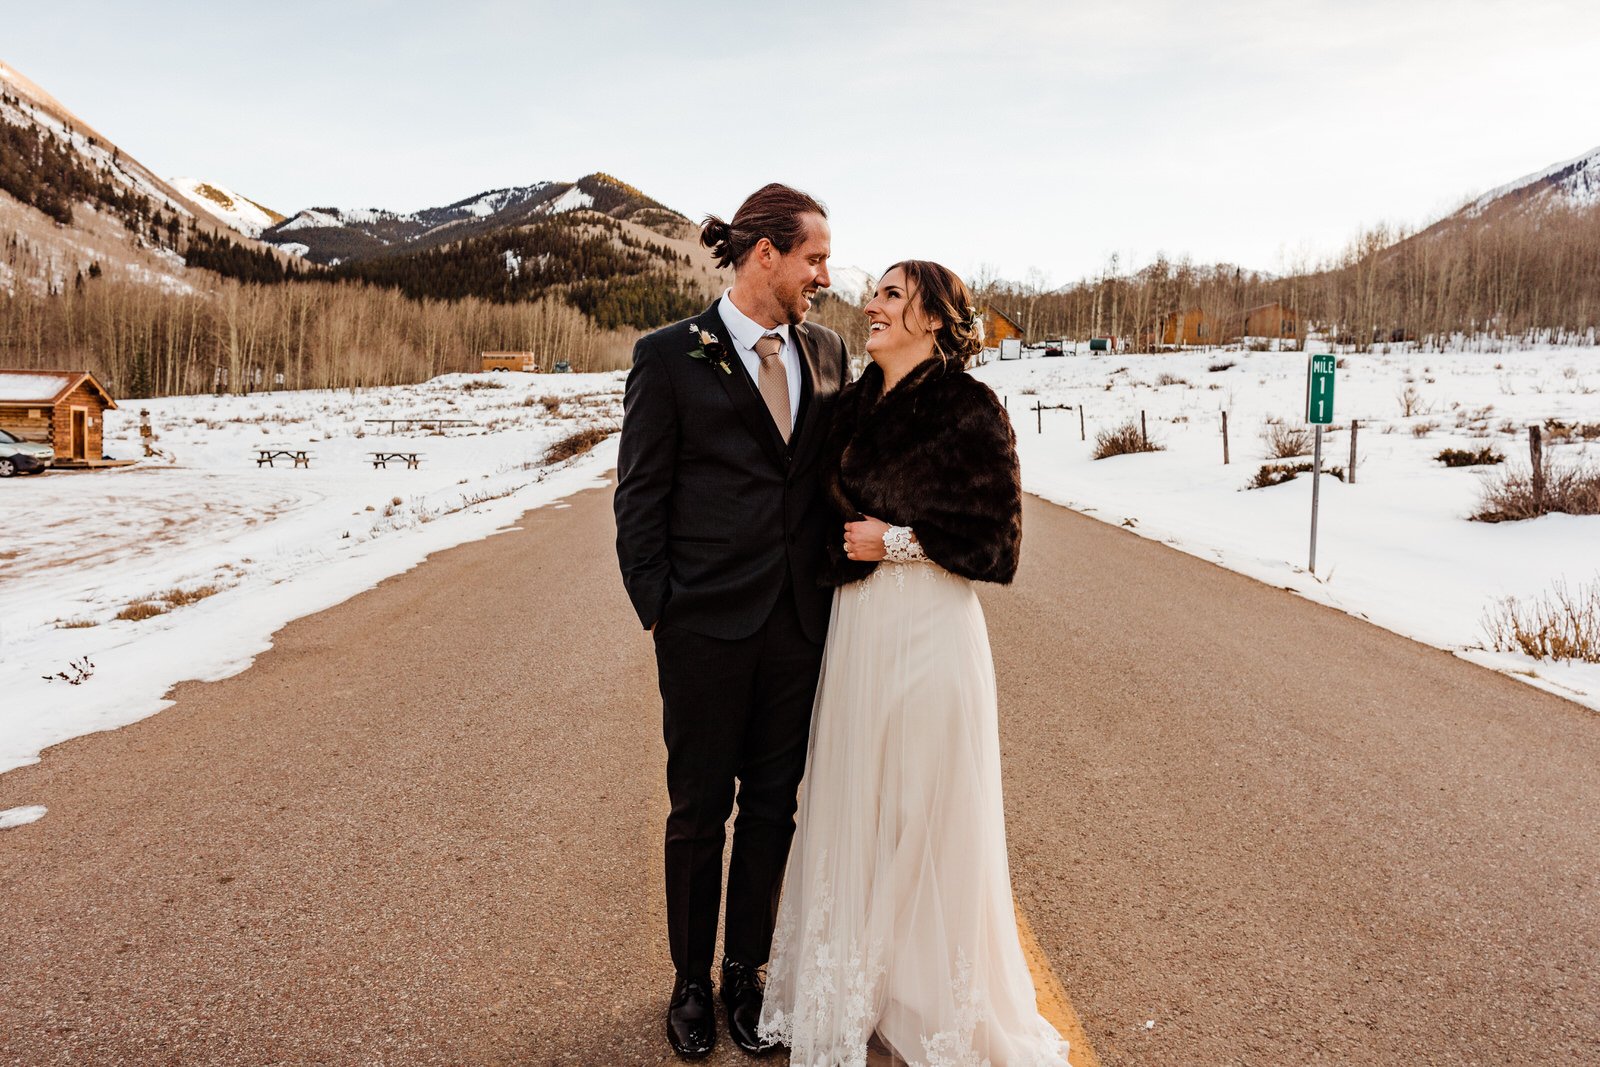 Colorado-Elopement-Romantic-Portraits-of-Newlyweds6.jpg